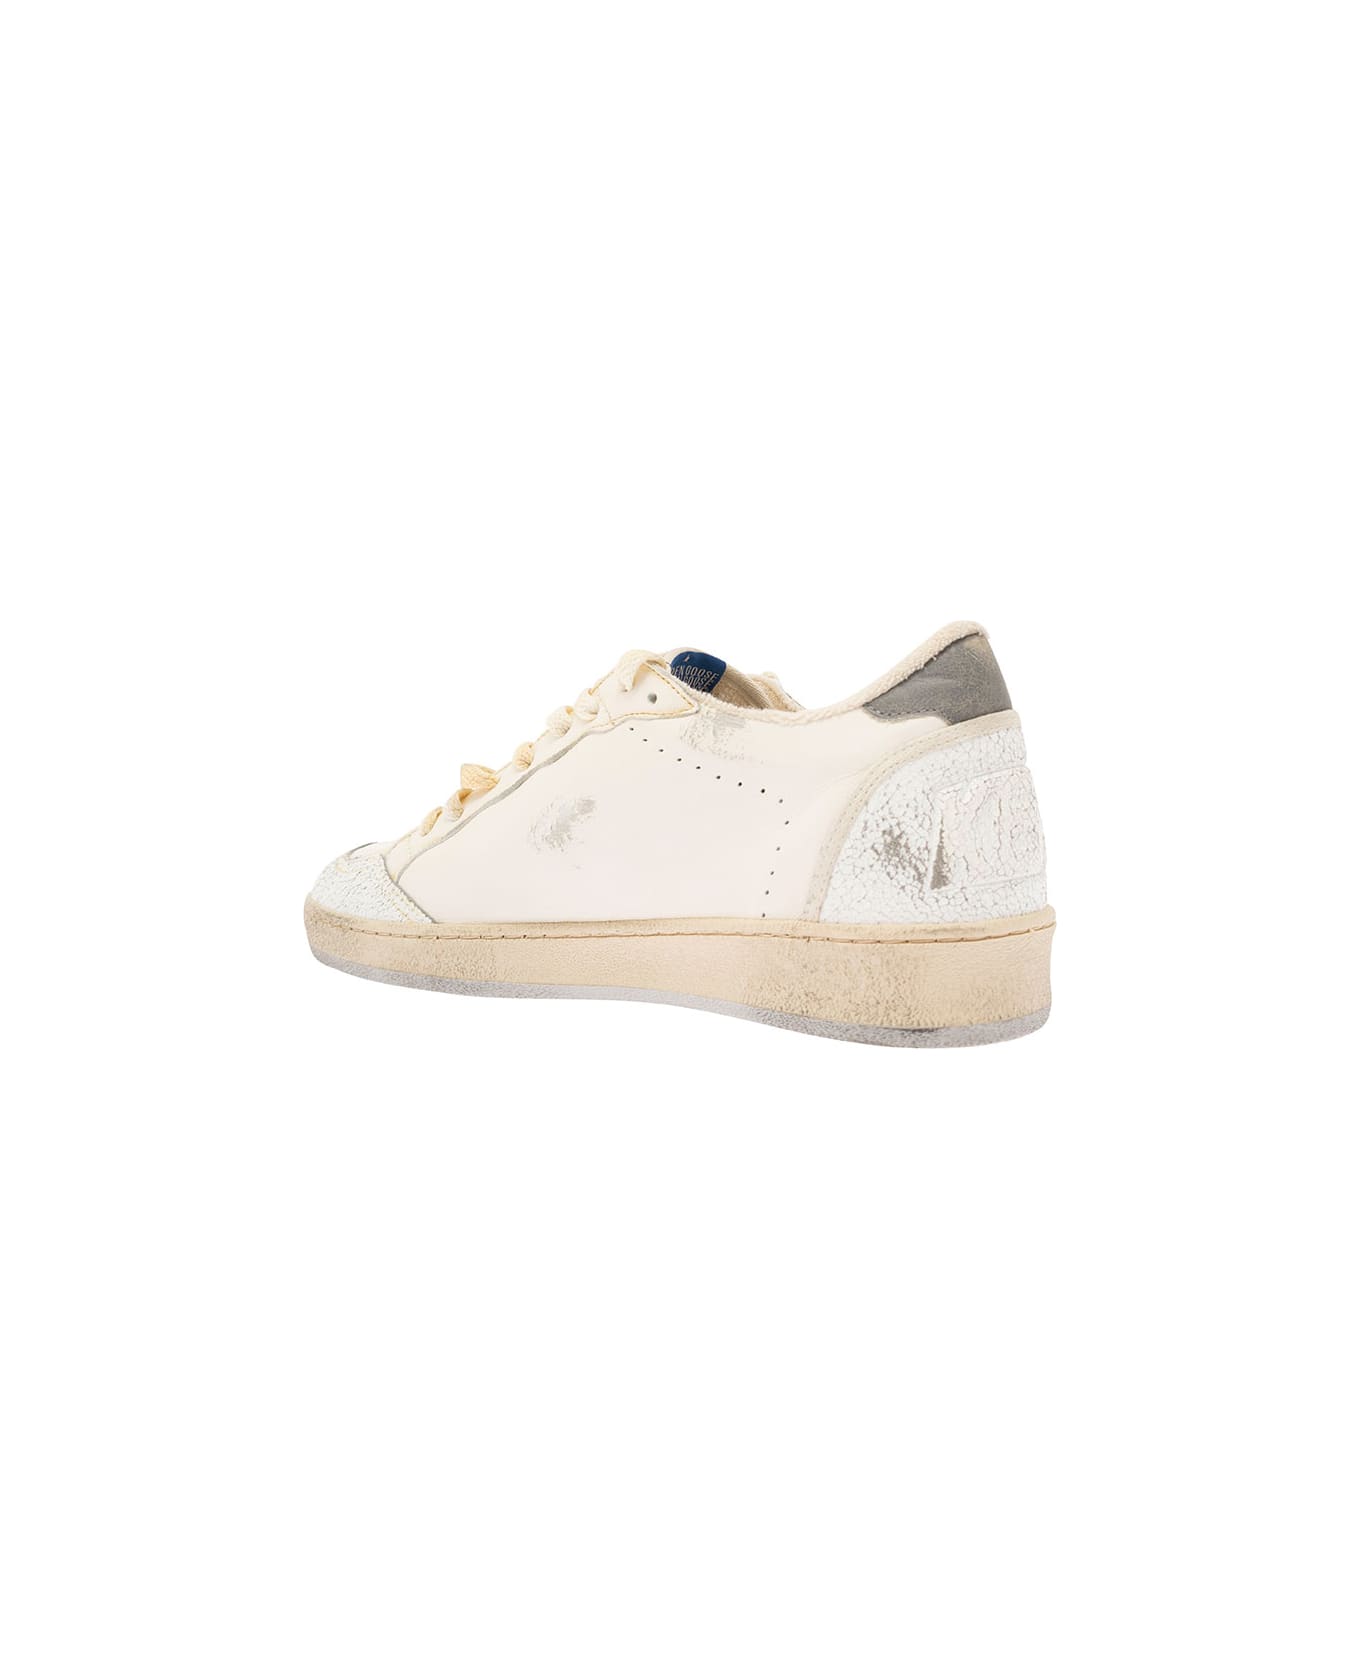 Golden Goose Ball Star Sneakers - White/Grey